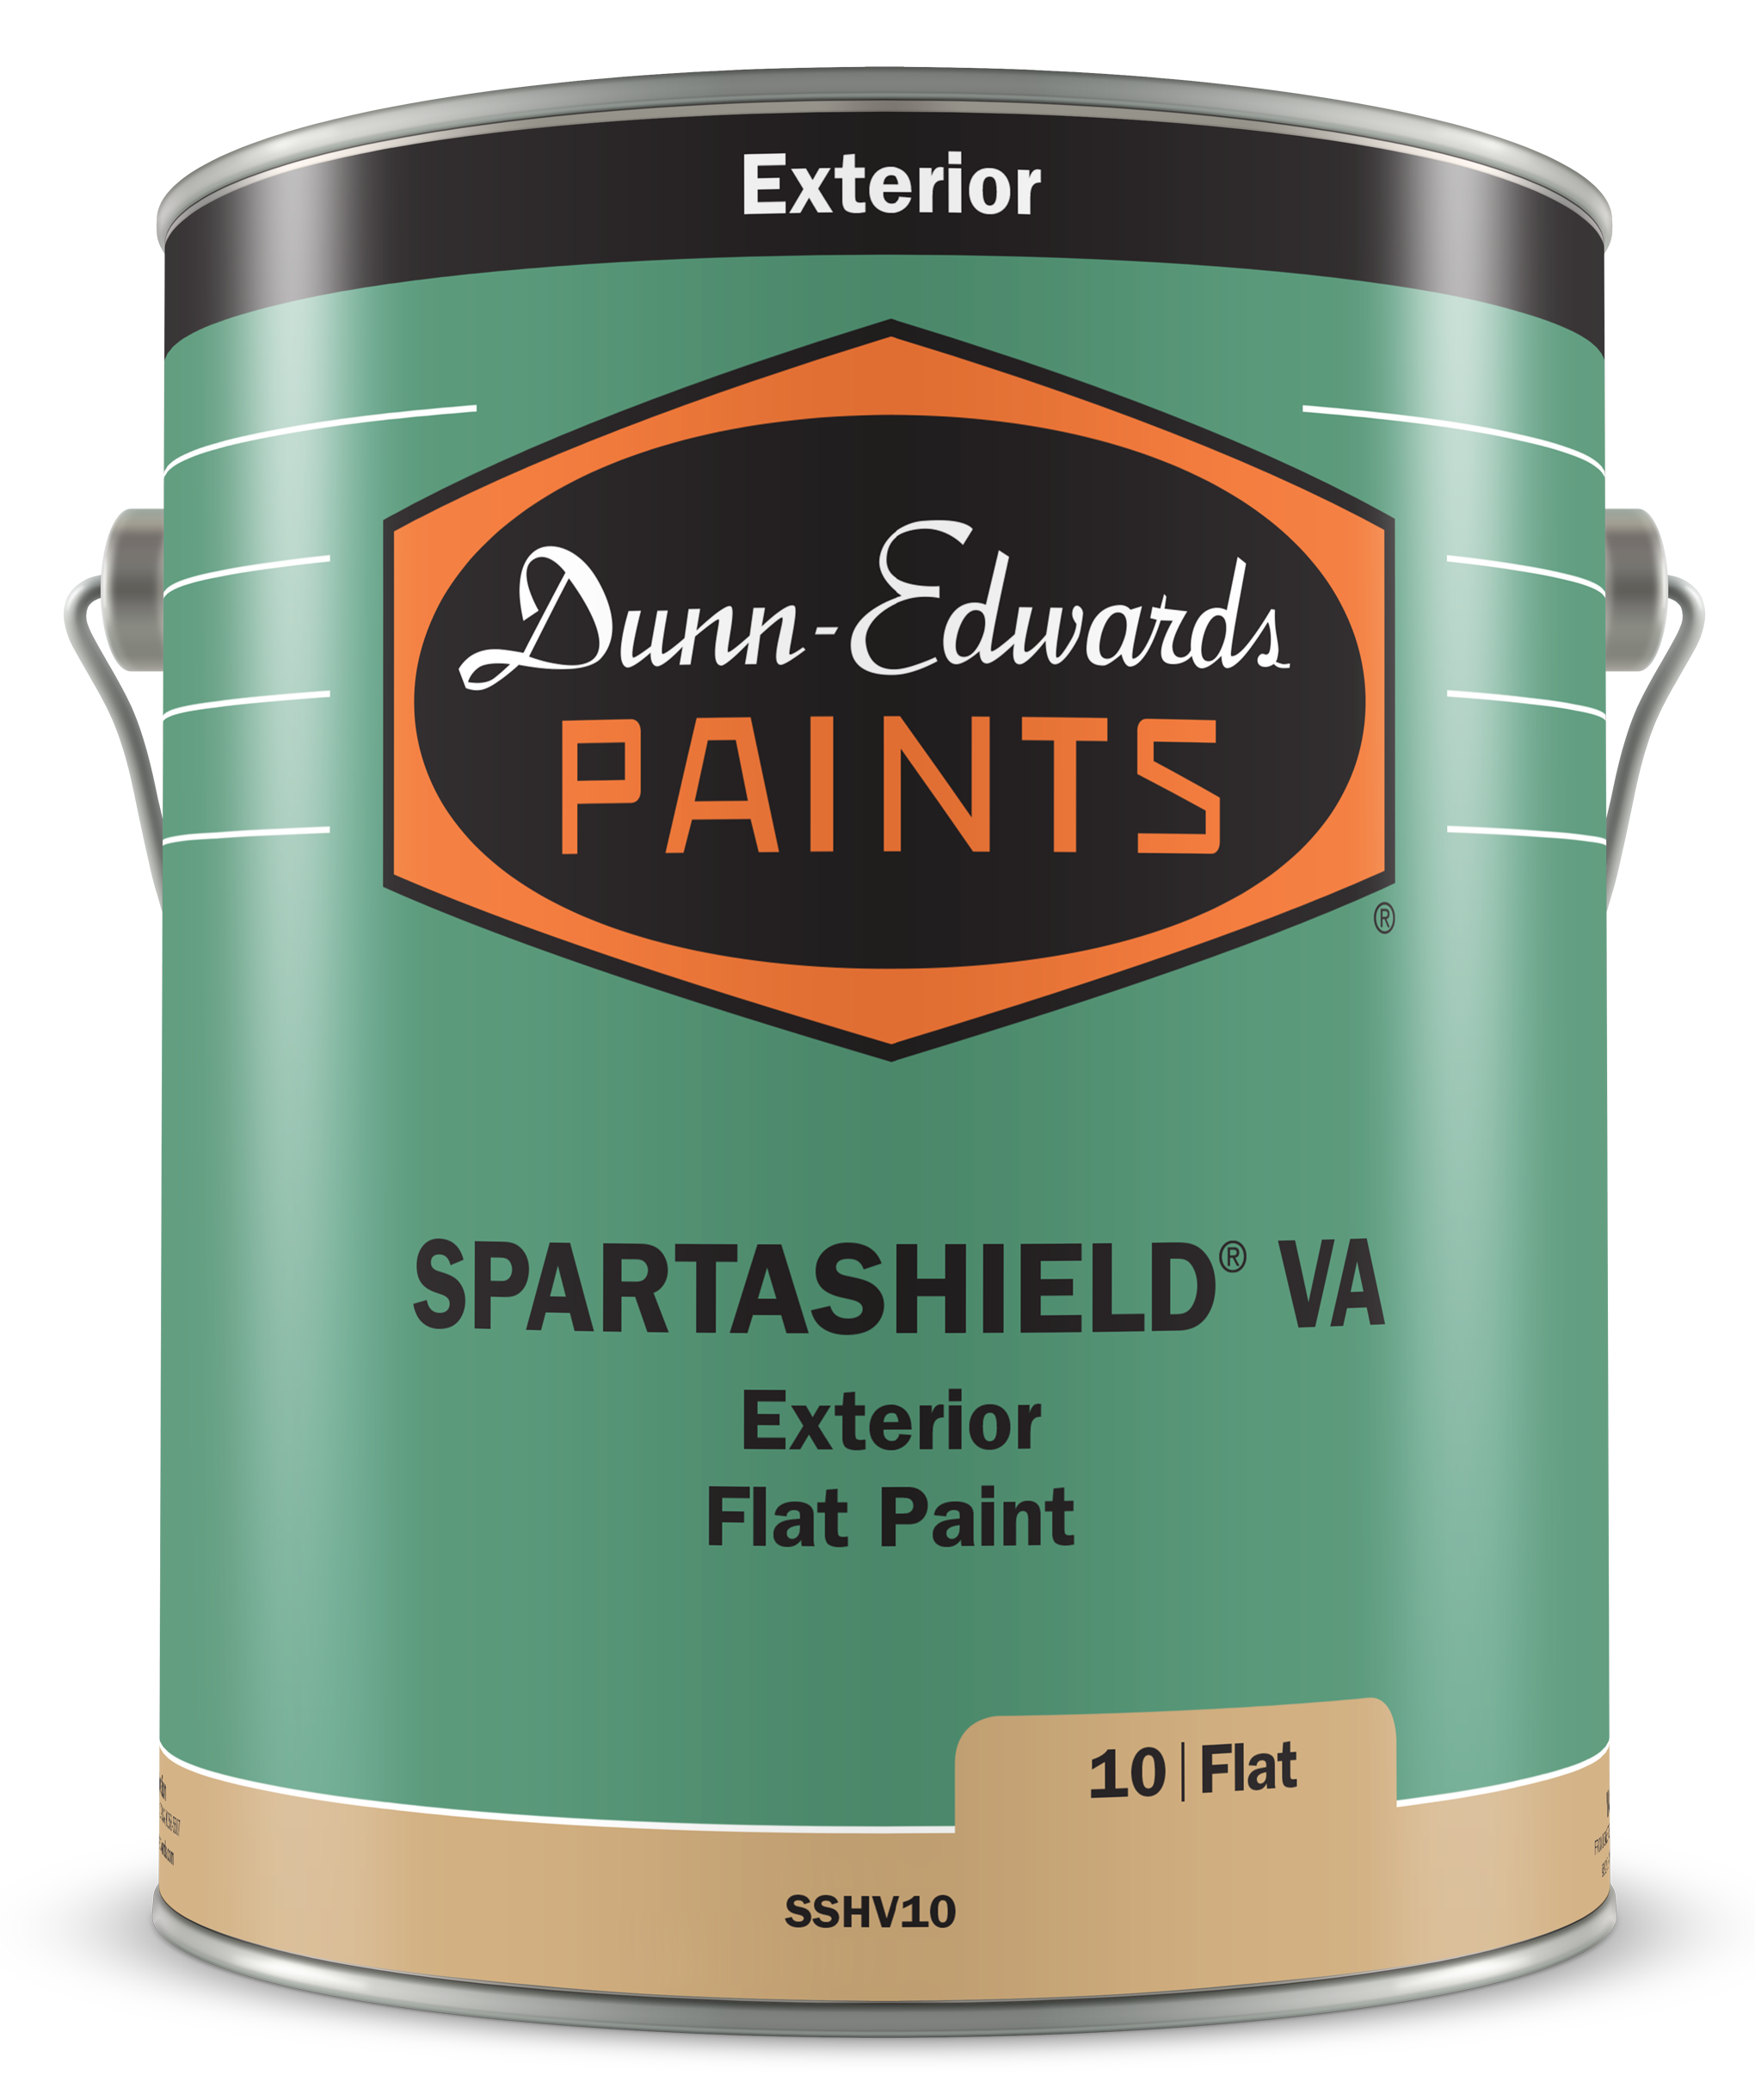 SPARTASHIELD VA Exterior Flat Paint Can